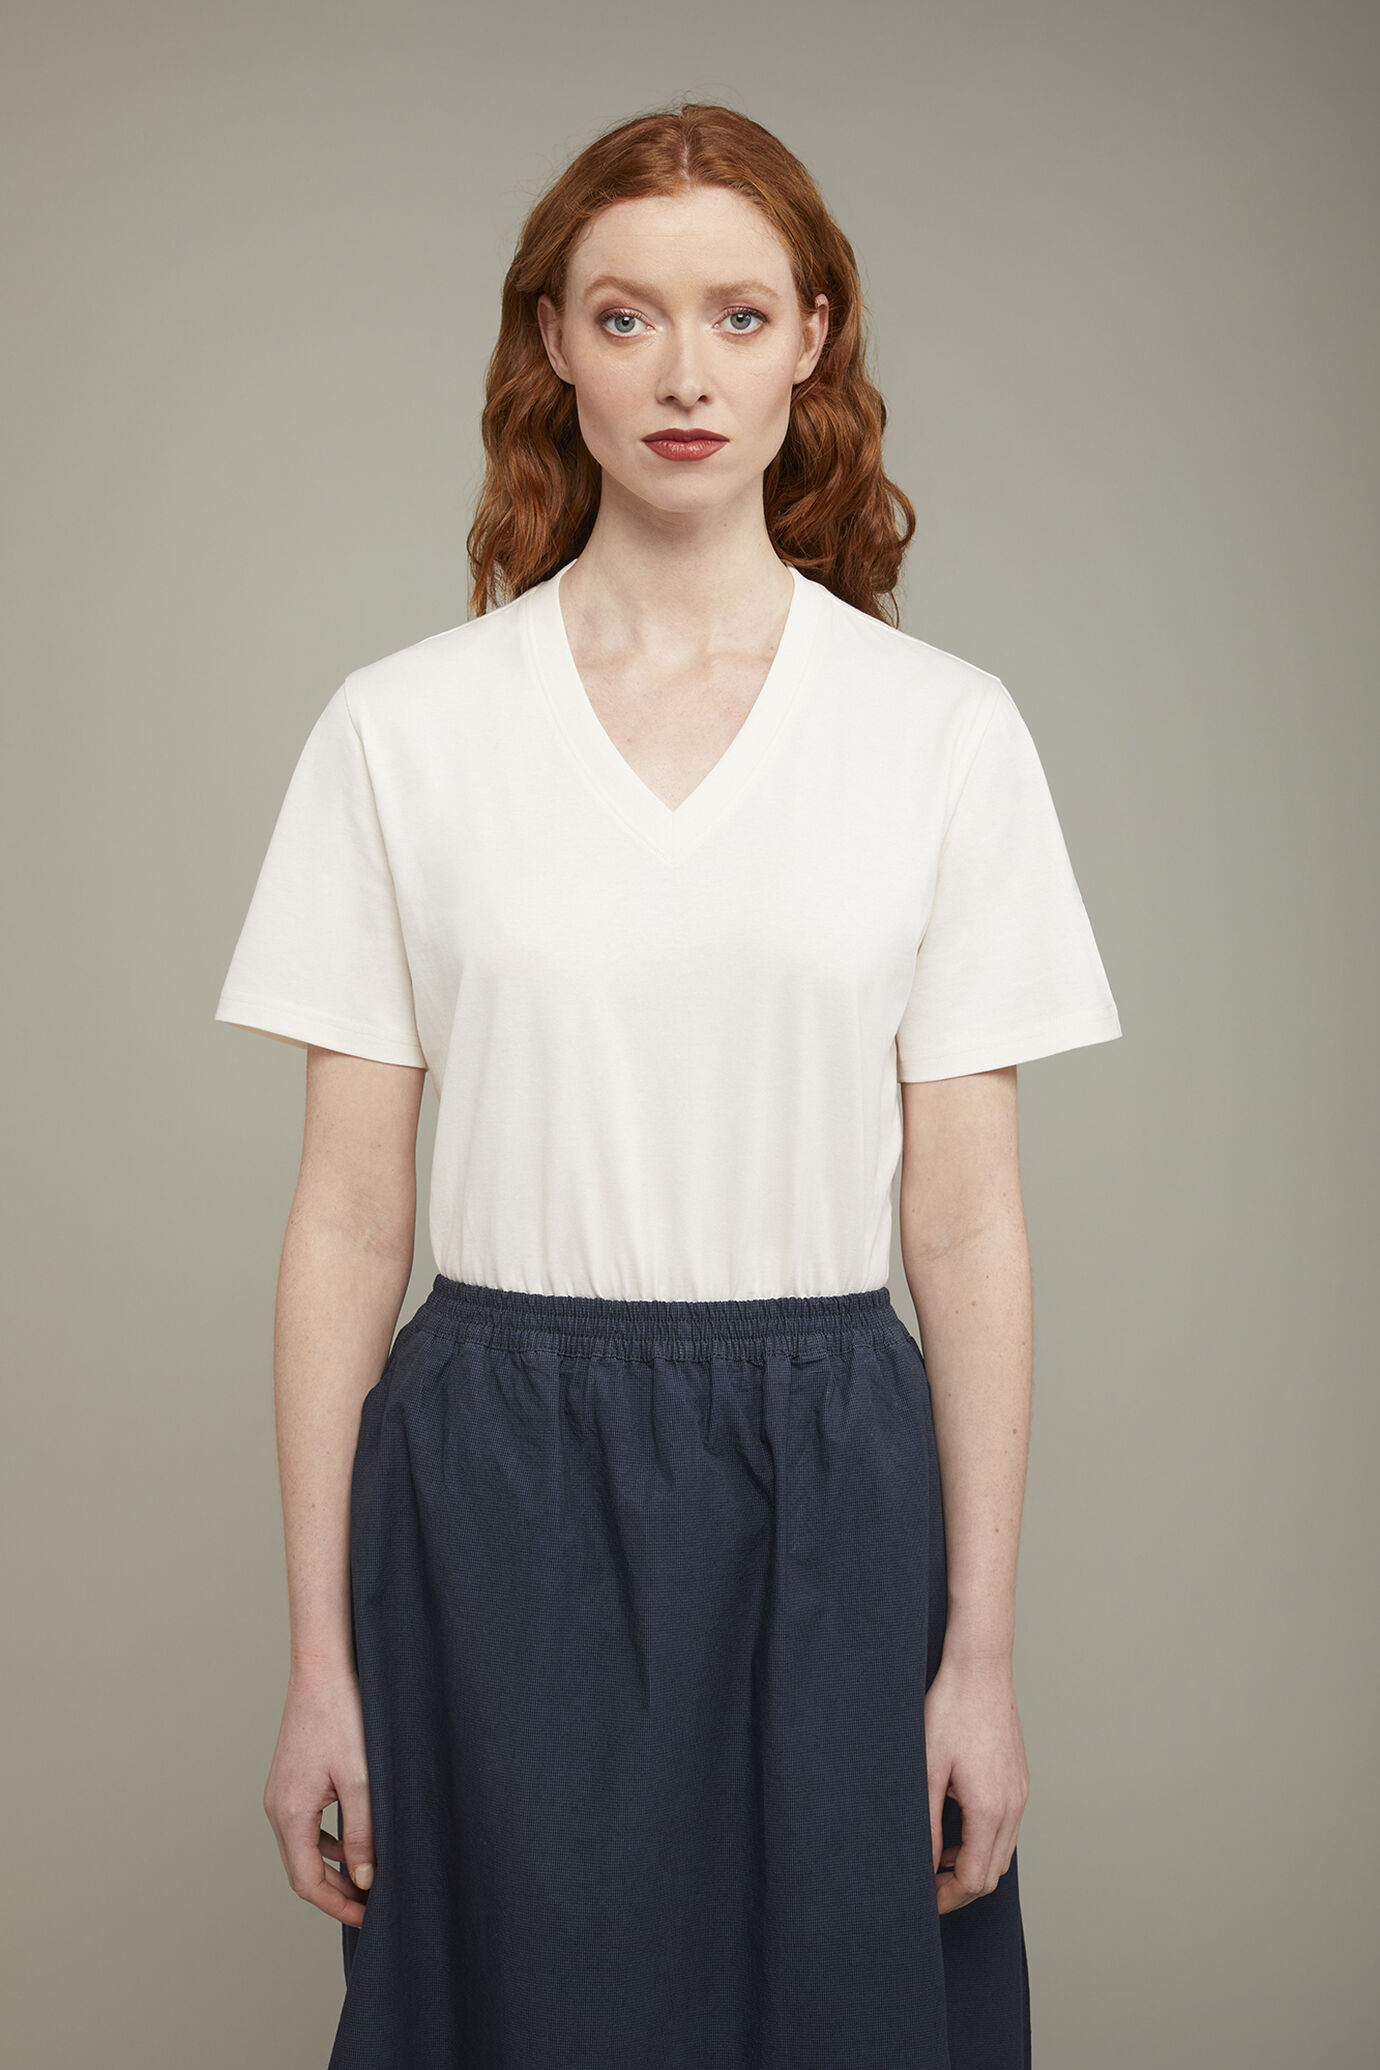 Women’s v-neck t-shirt 100% cotton regular fit